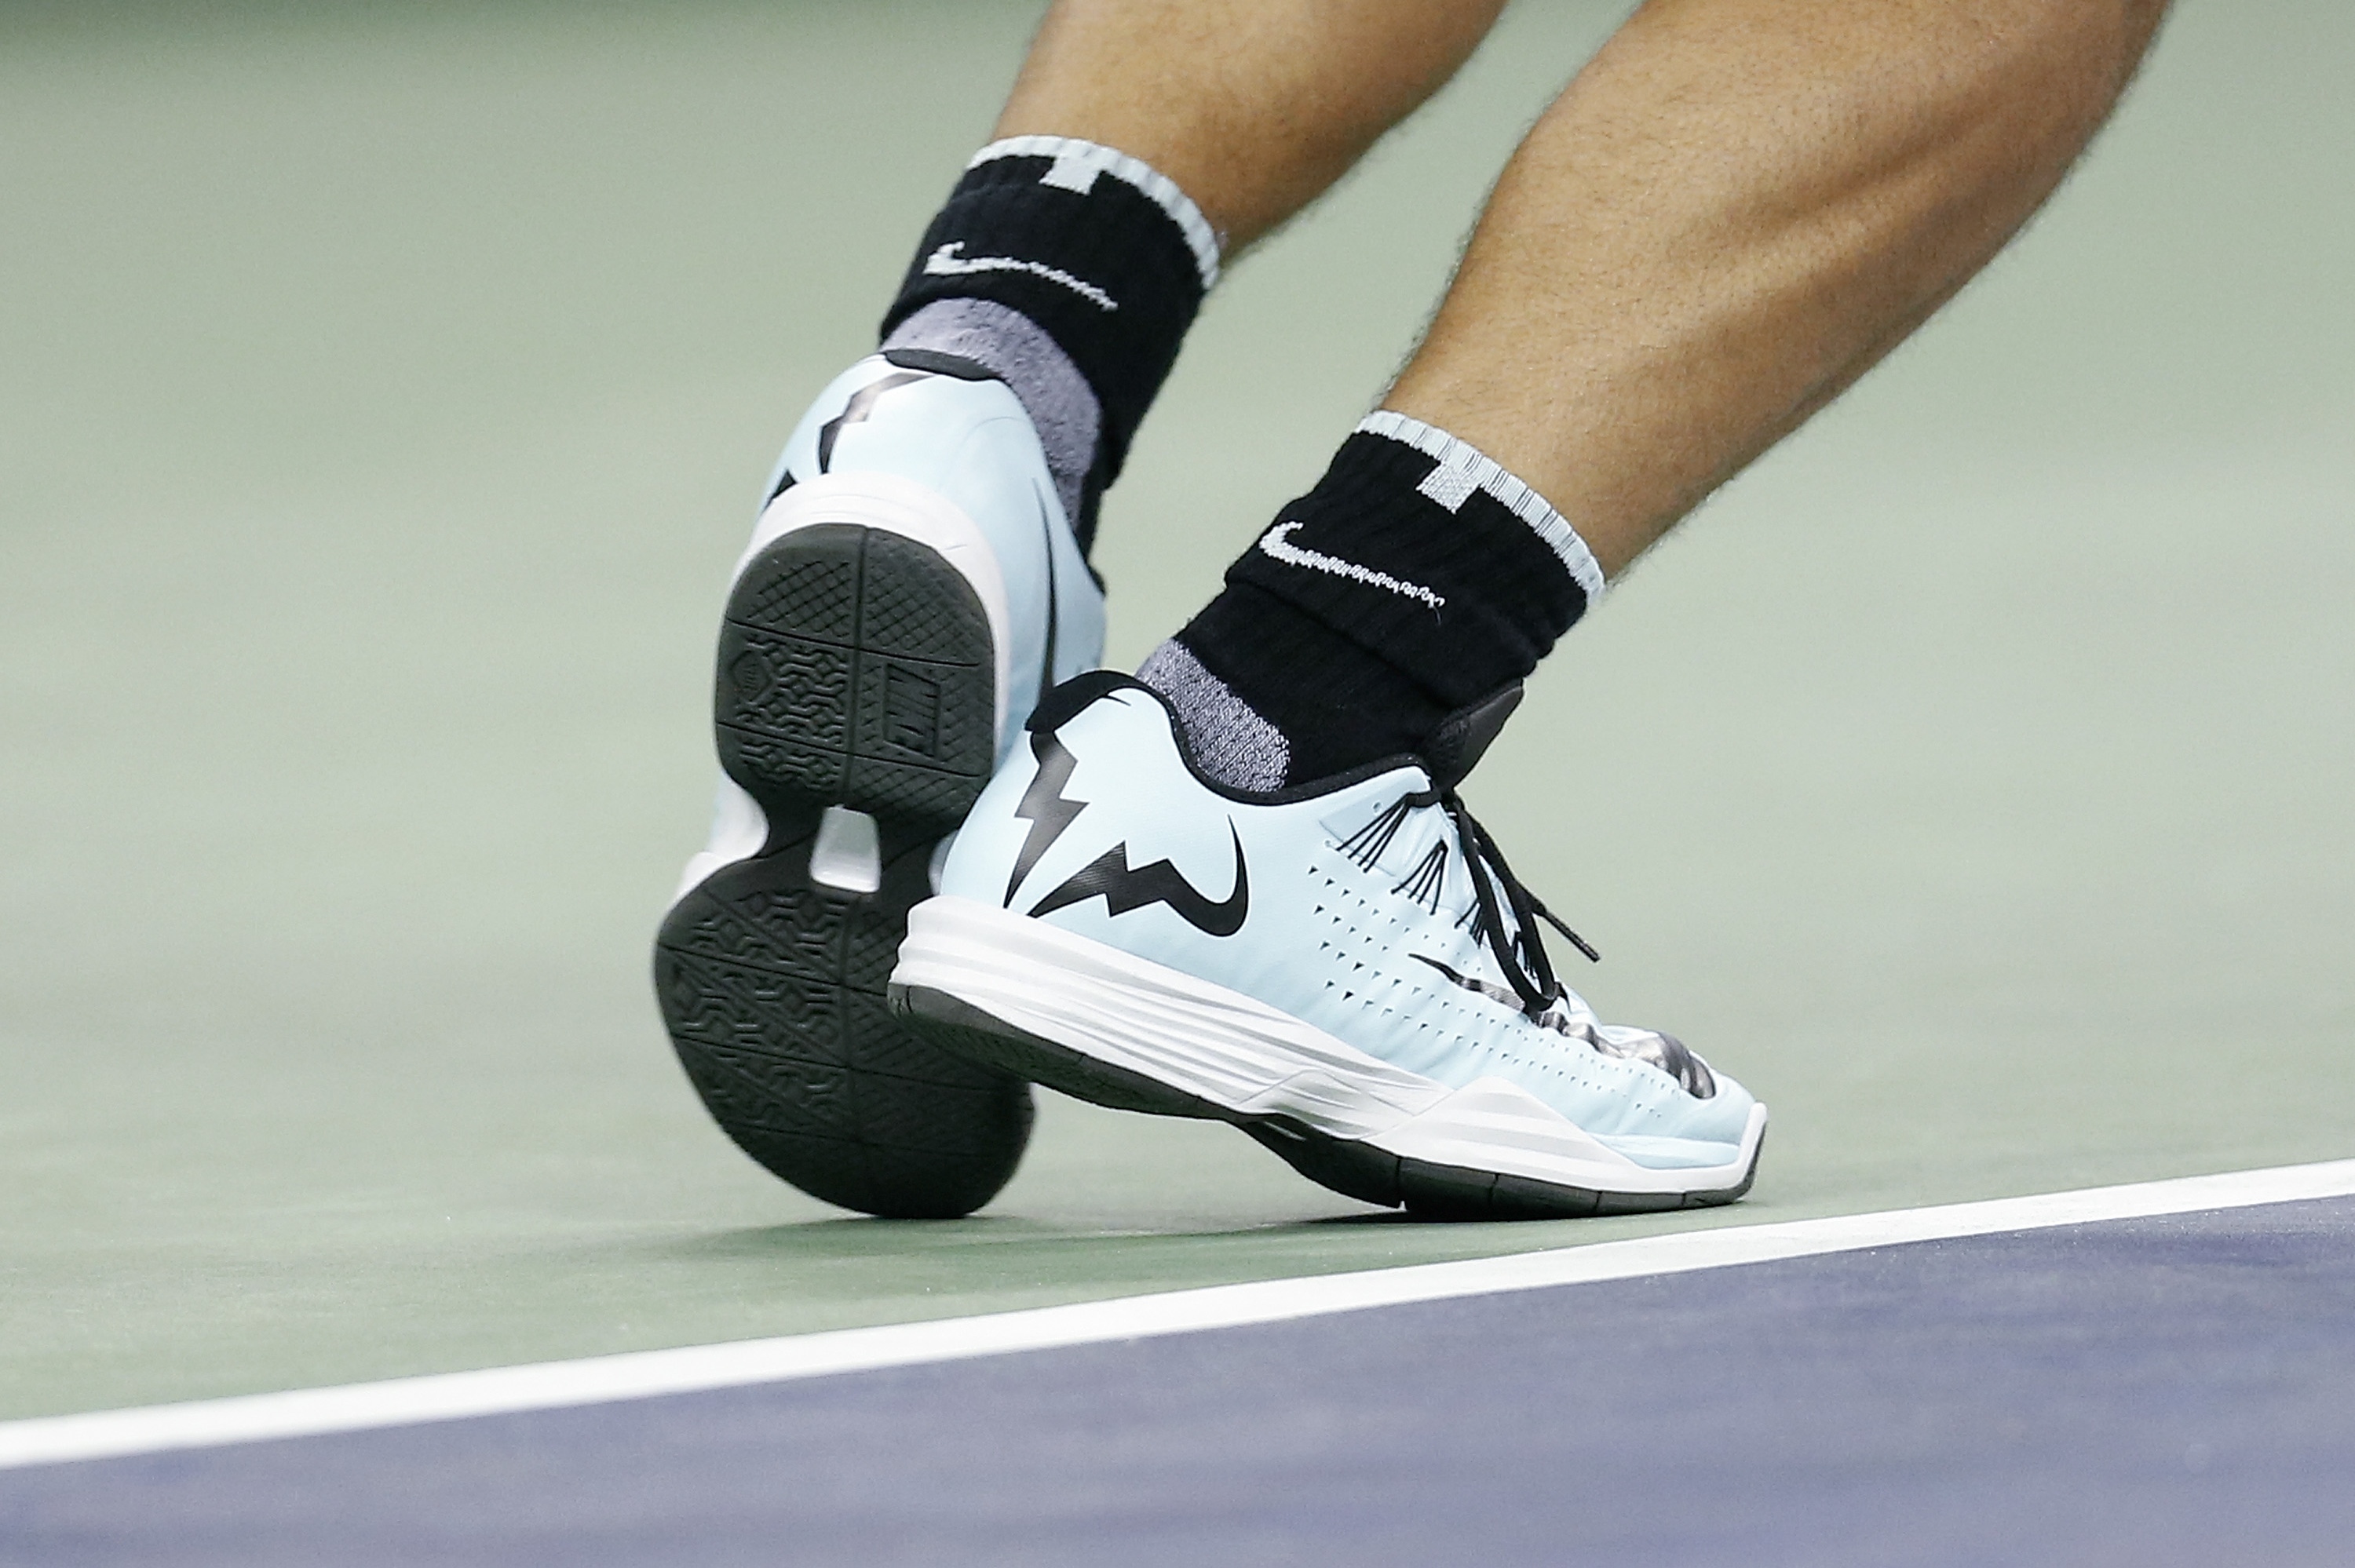 Rafael Nadal Beats Ivo Karlovic In Shanghai Opener [PHOTOS] – Rafael ...